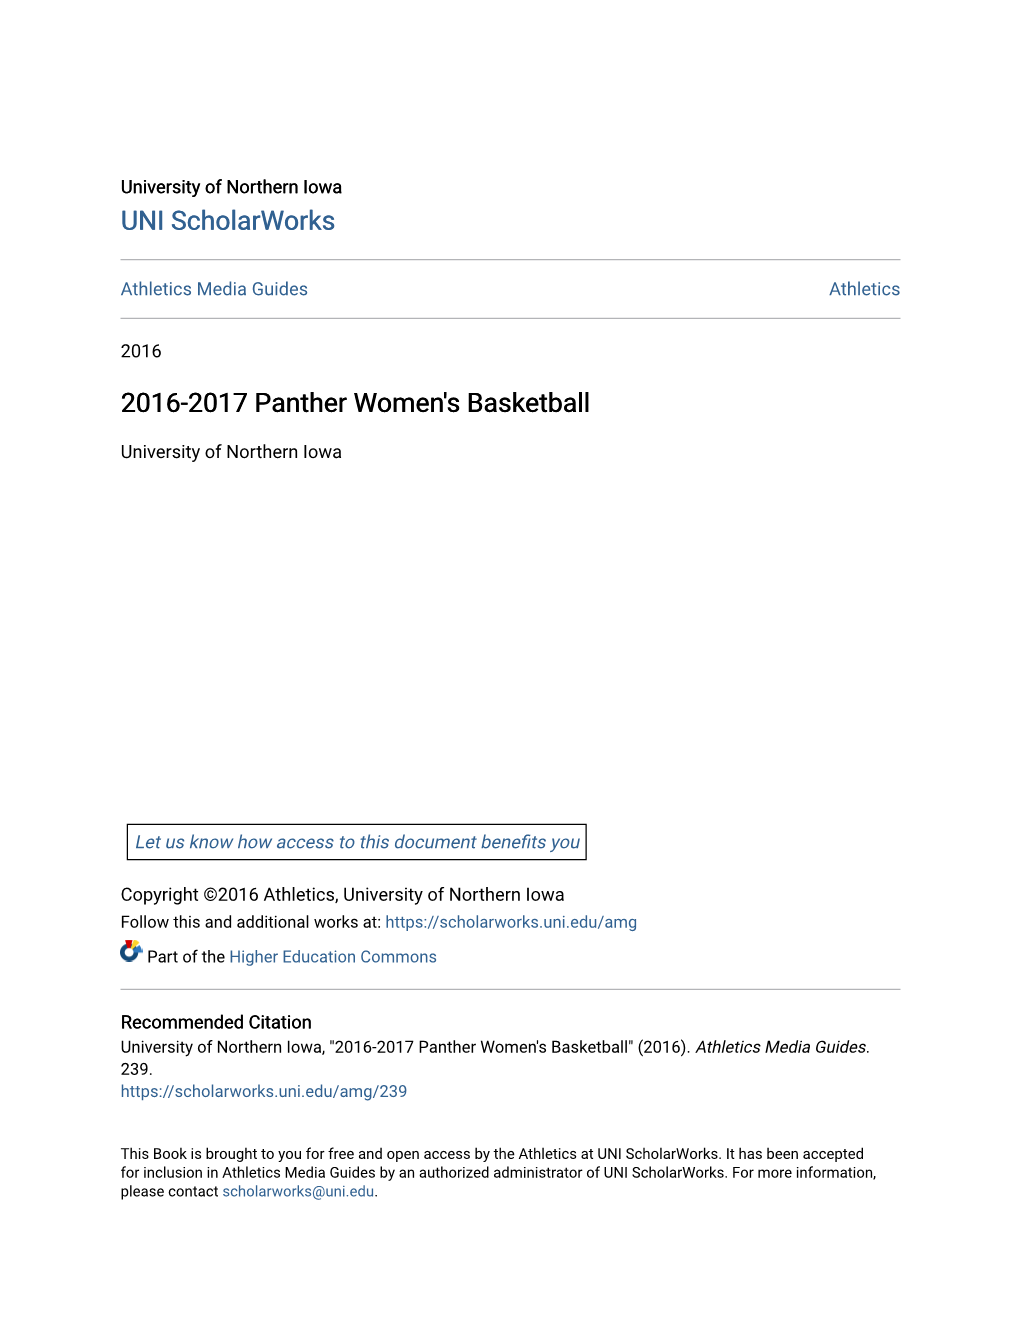 2016-2017 Panther Women's Basketball